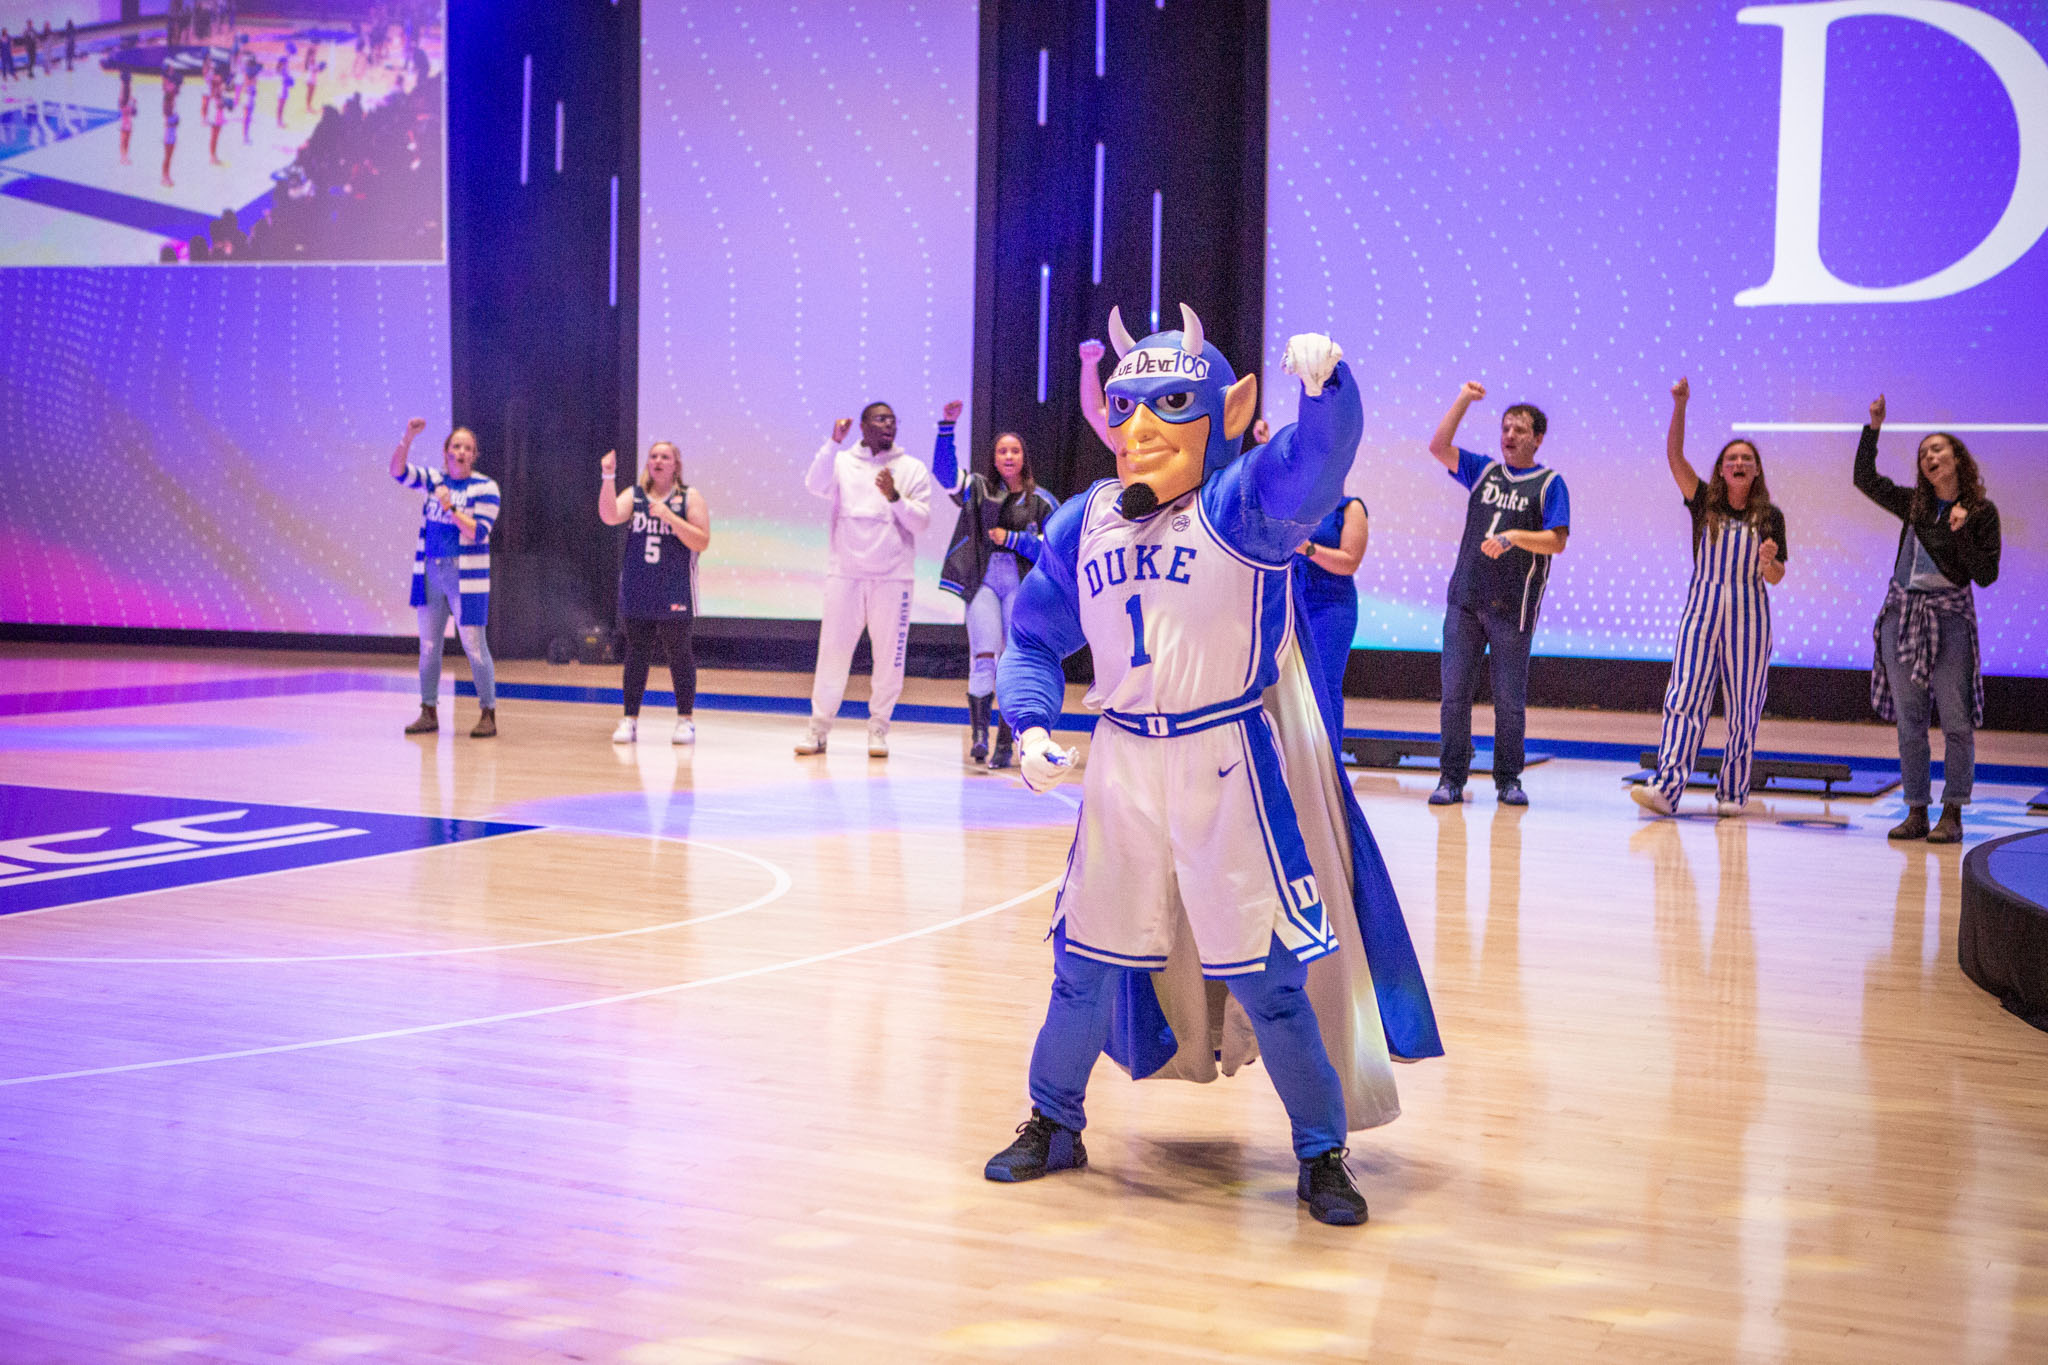 The Duke Blue Devil at the centennial kickoff Photo by Duke University